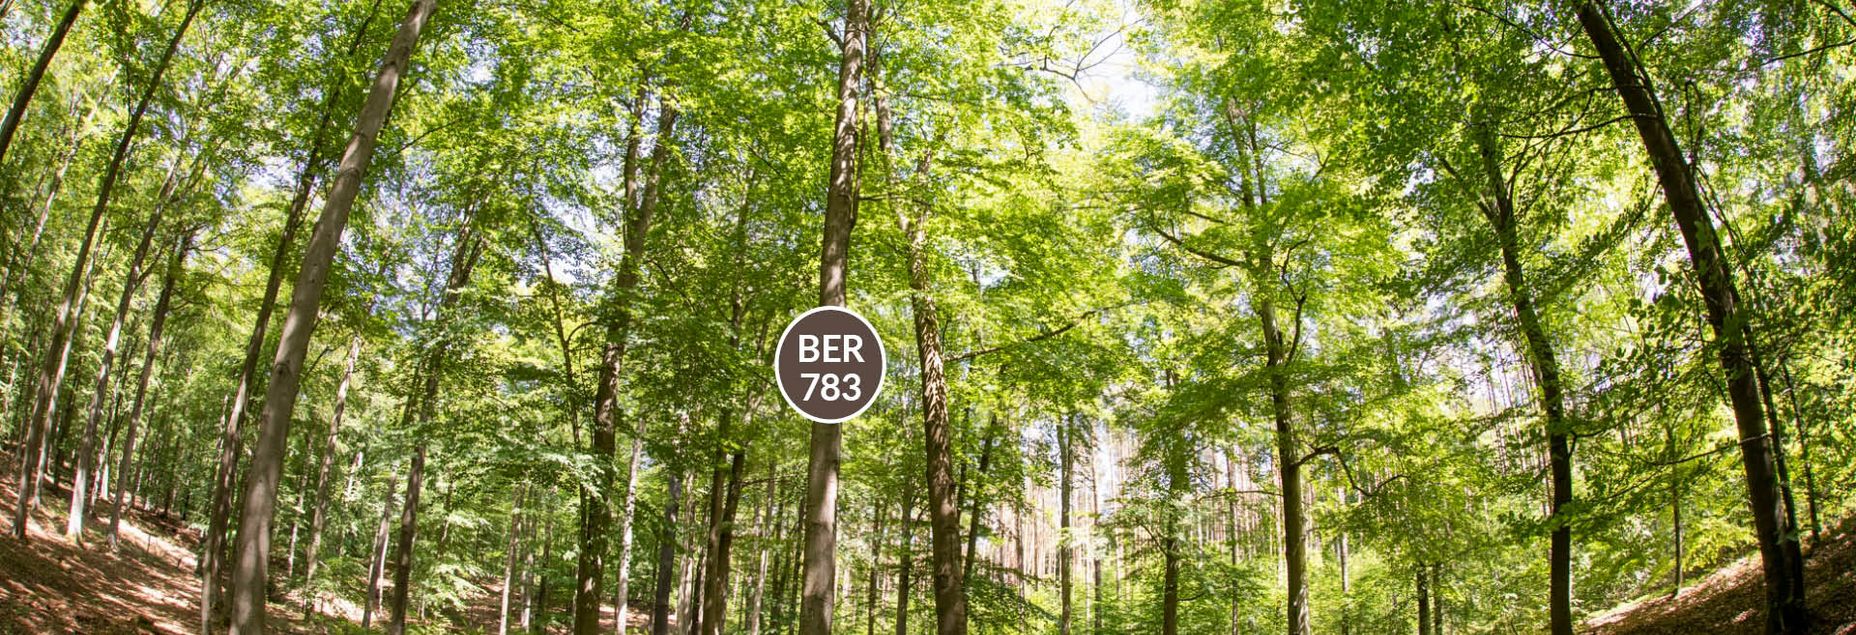 Baum BER 783 - Fisheyeperspektive